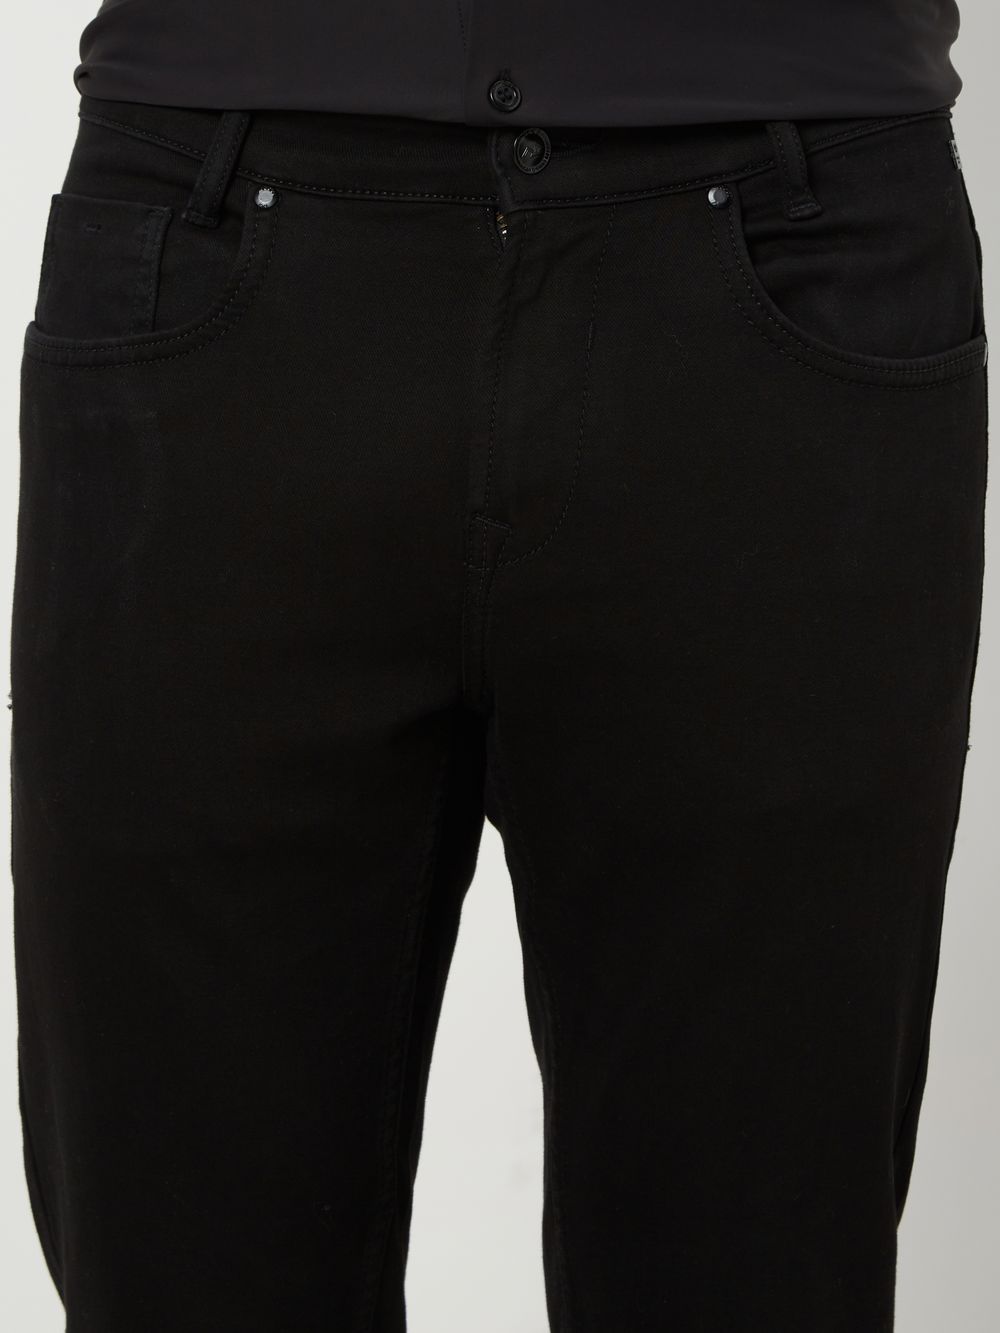 Jet Black Narrow Fit Denim Deluxe Stretch Jeans